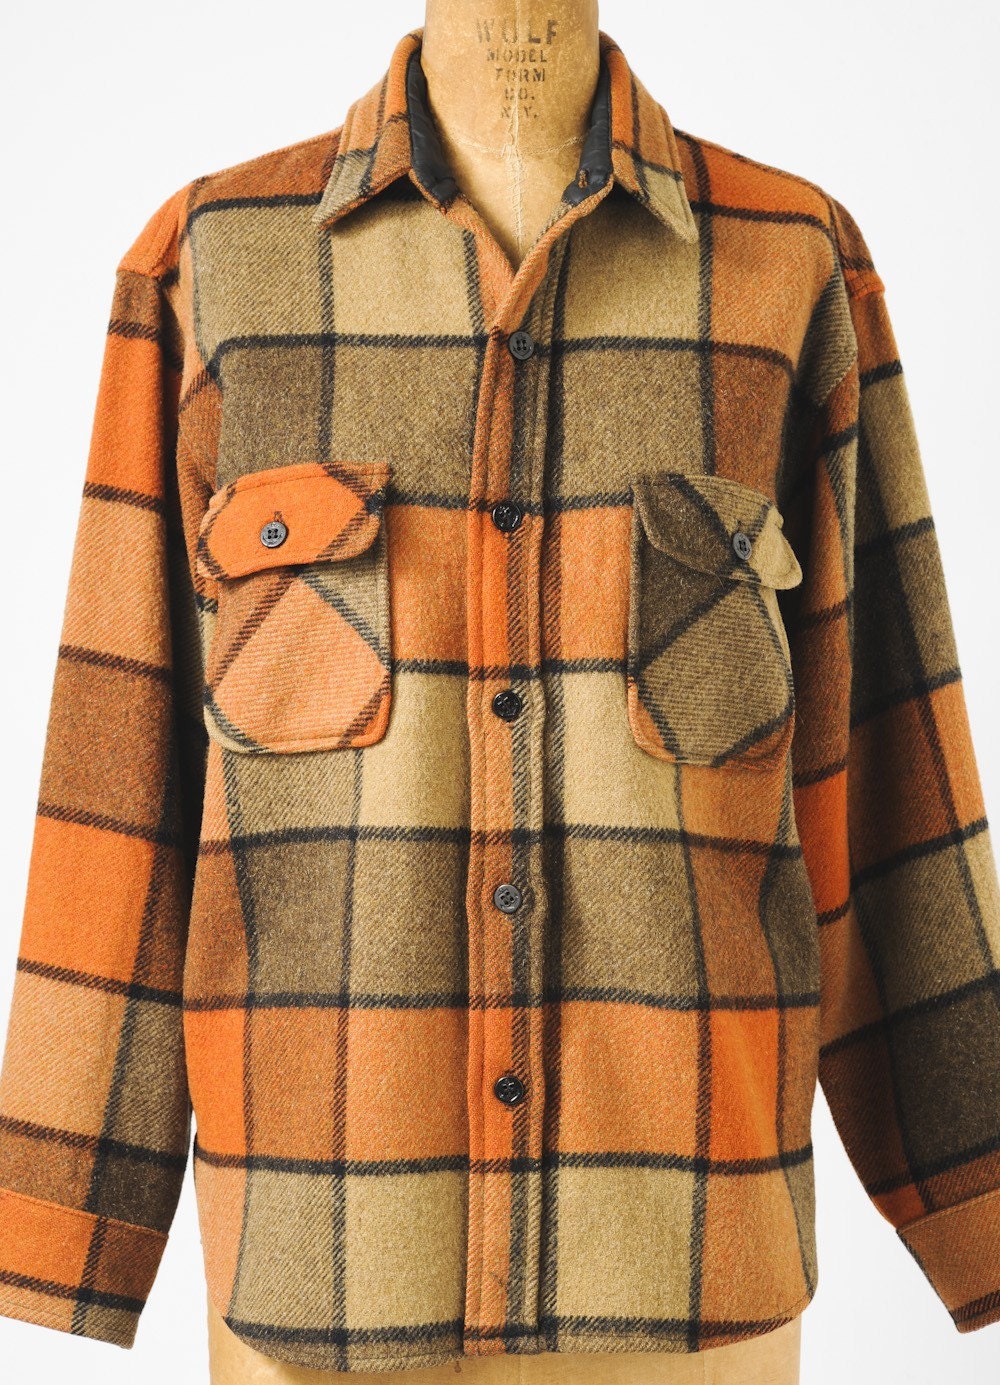 Vintage Men's Wool Plaid Shirt Jacket 1950's by missfarfalla